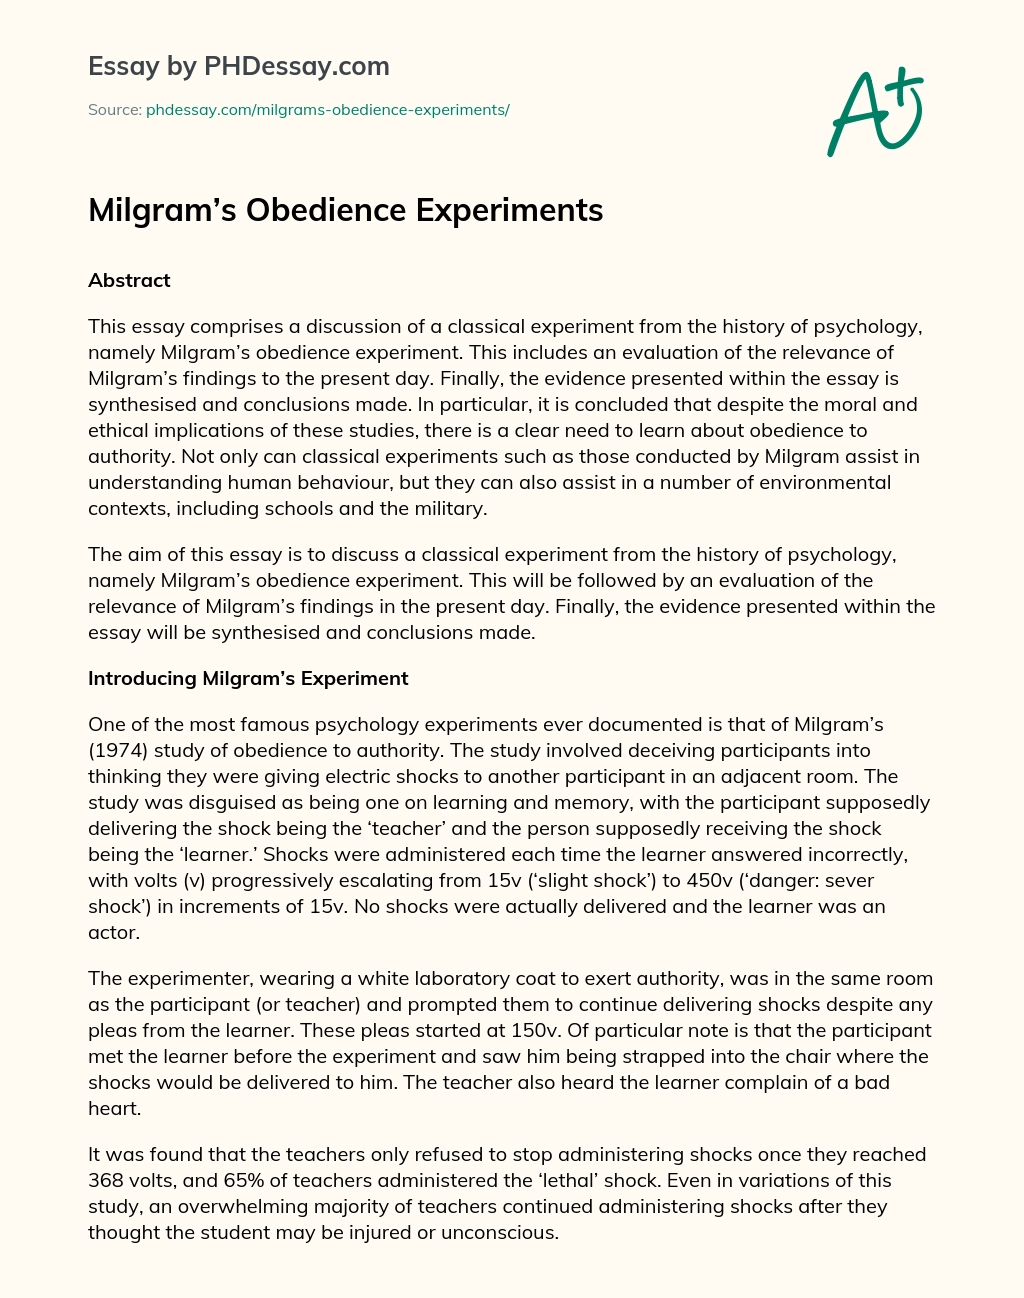 Milgram’s Obedience Experiments essay